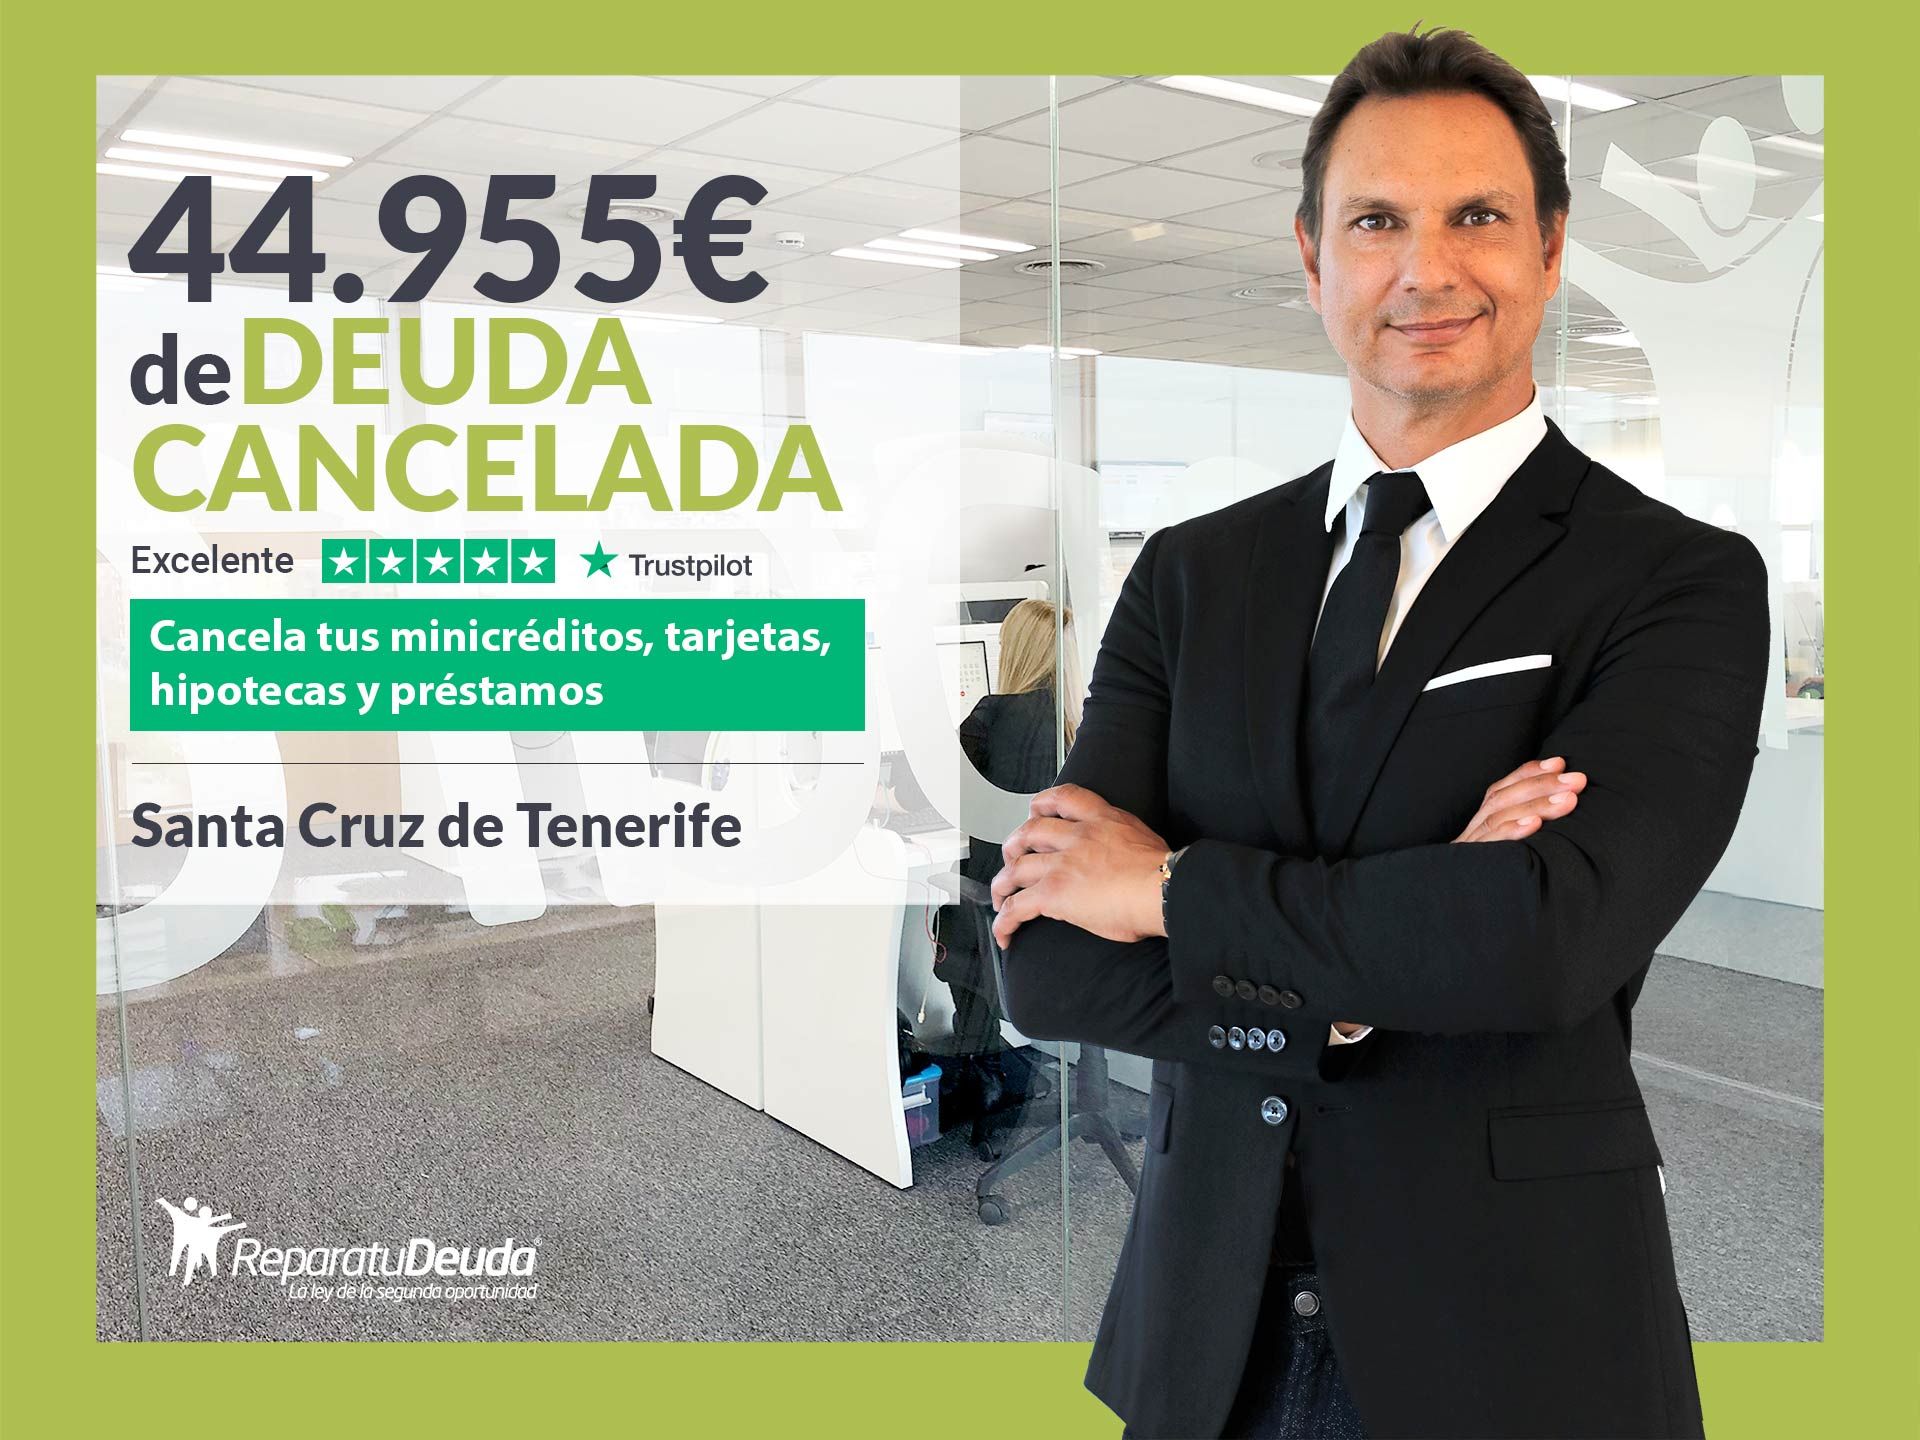 Fotografia Repara tu Deuda Abogados cancela 44.955 € en Tenerife